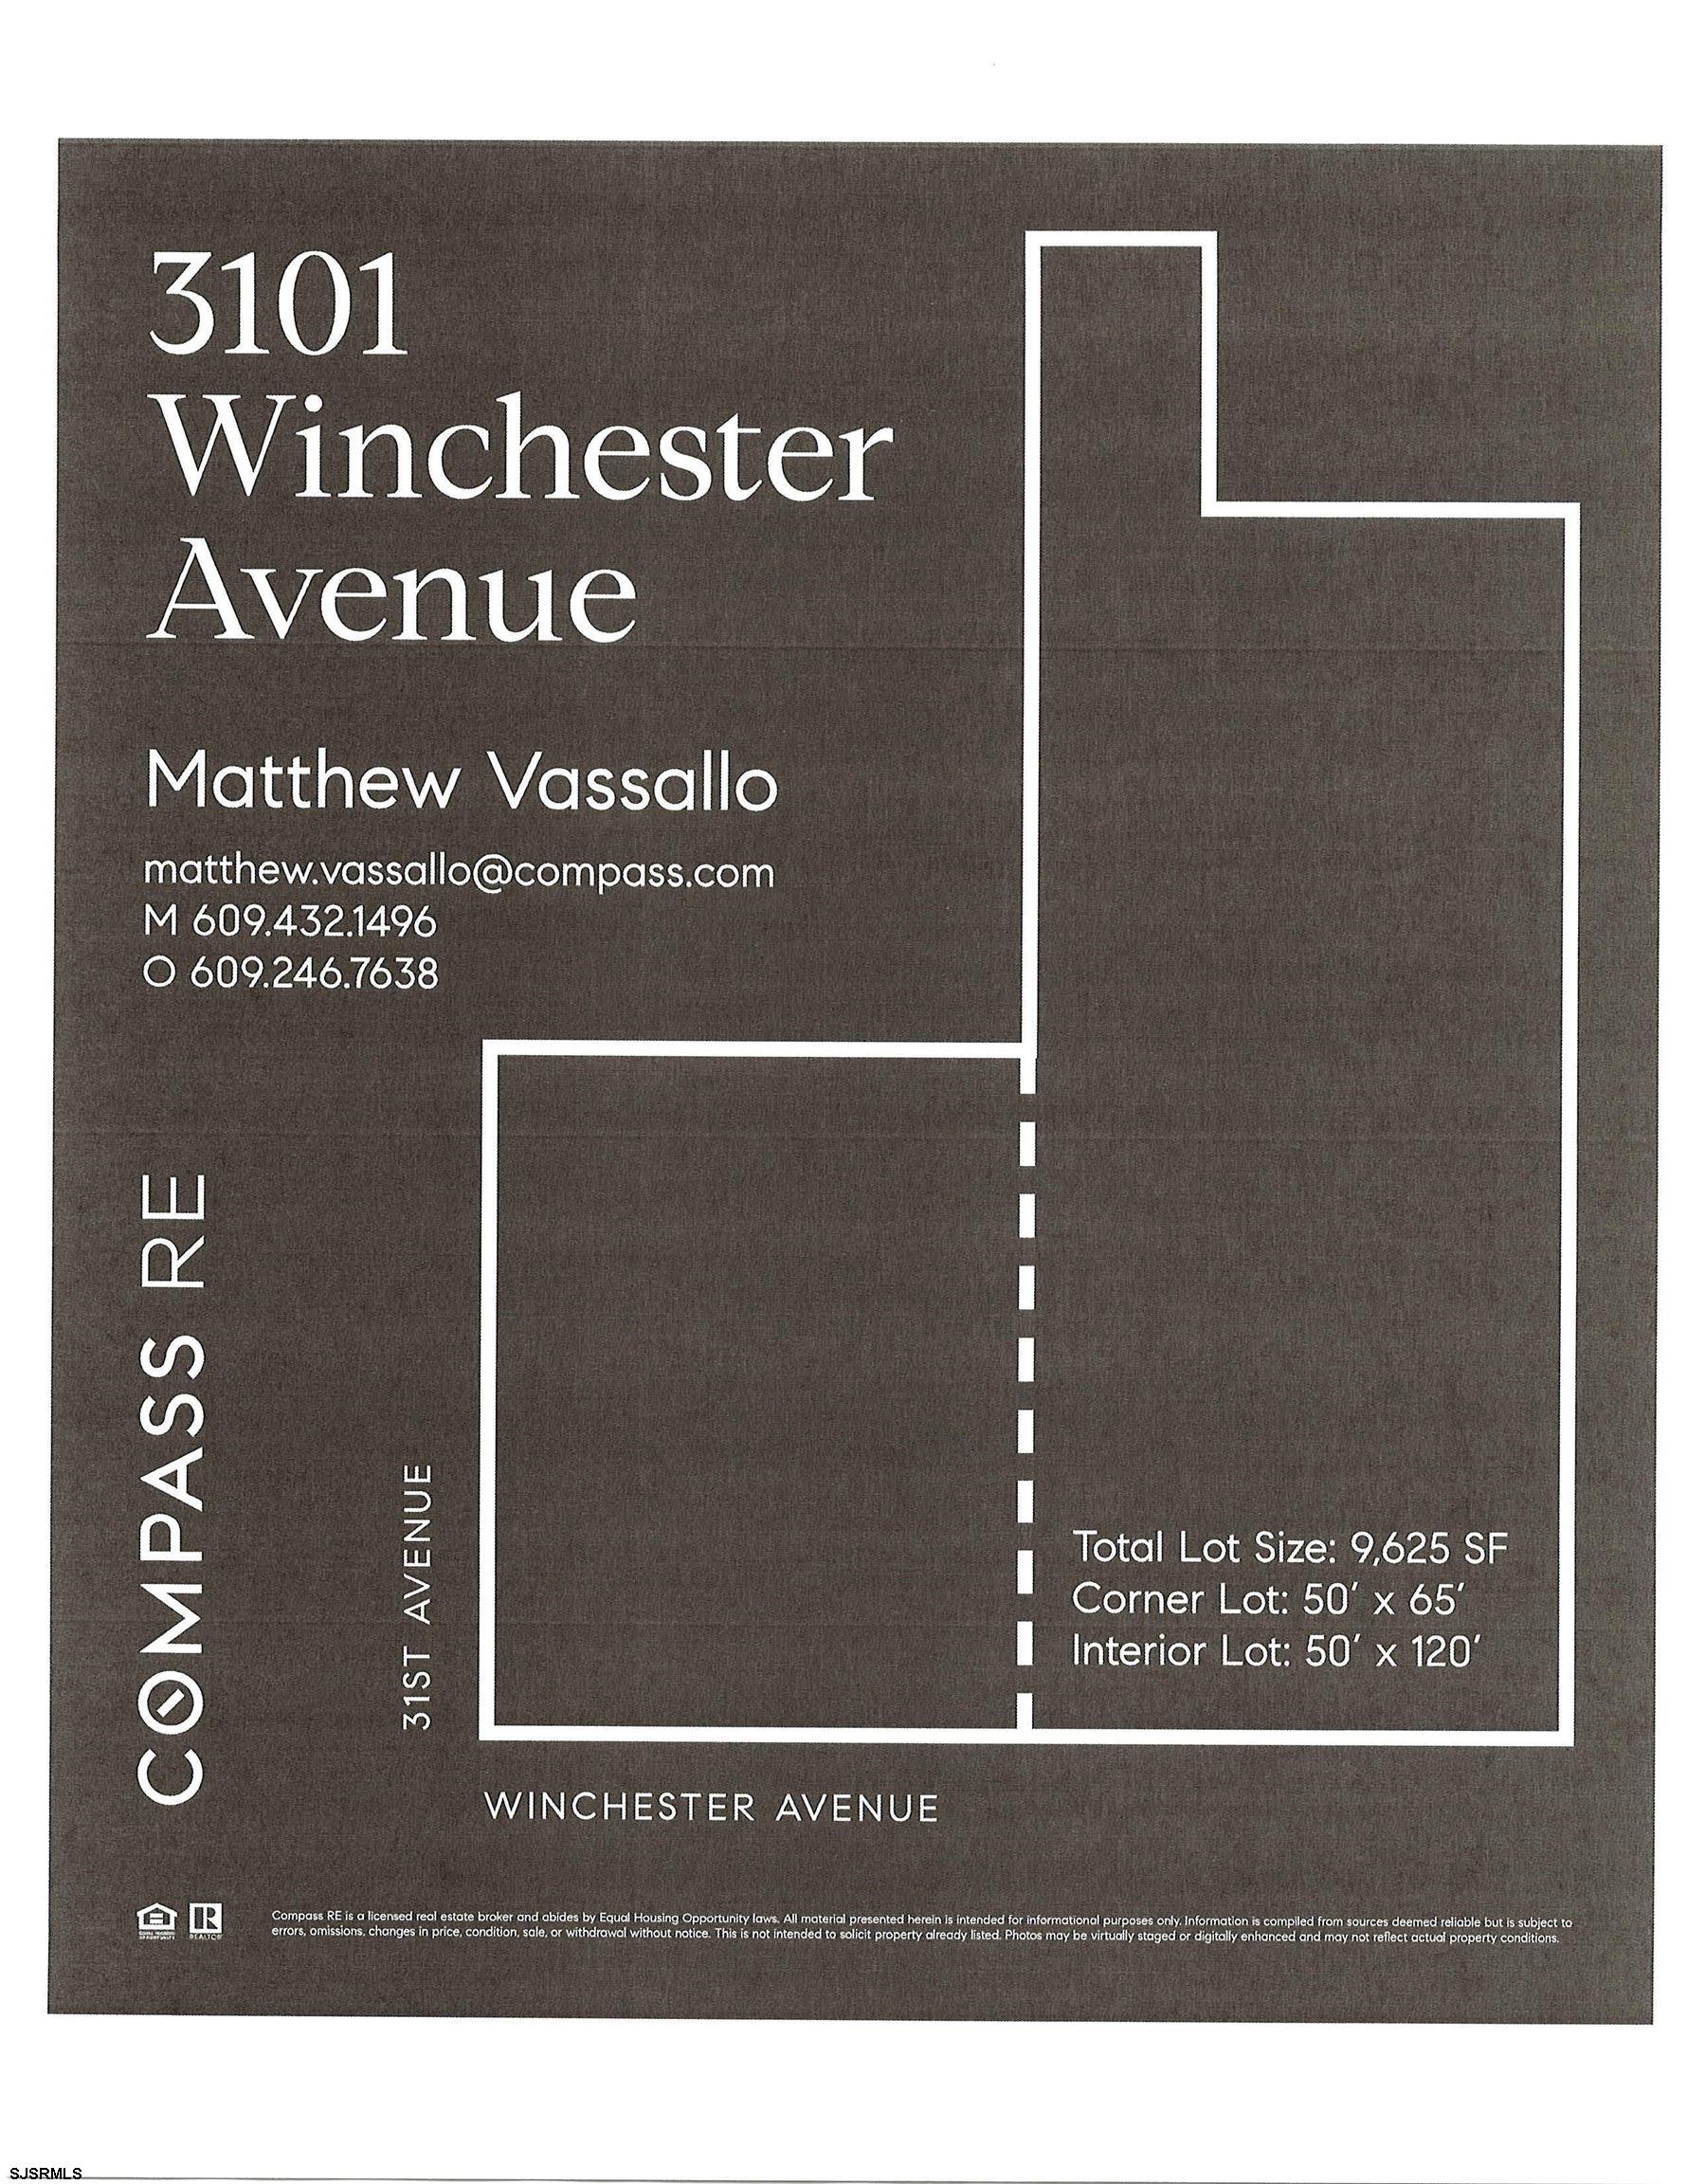 3101 Winchester Ave, Longport, NJ 08403